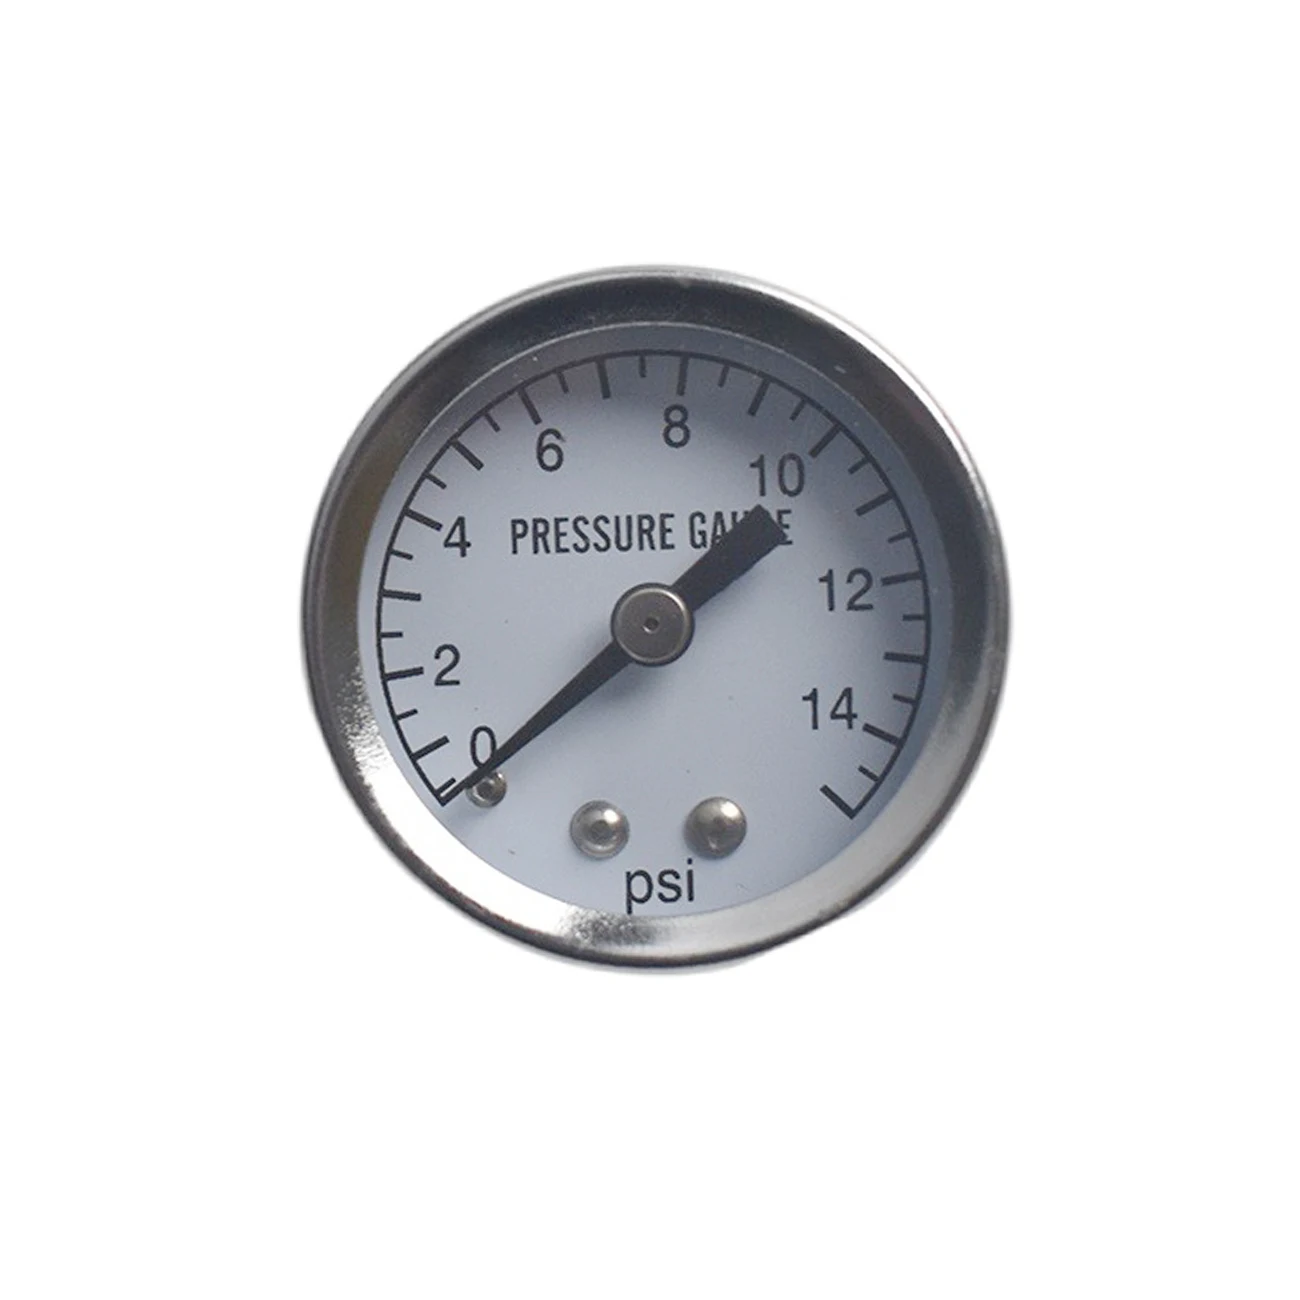 Manomètre de pression de carburant basse pression, raccord mâle NPT, montage direct, 1.5 po, 0-15PSI, 1/8 po